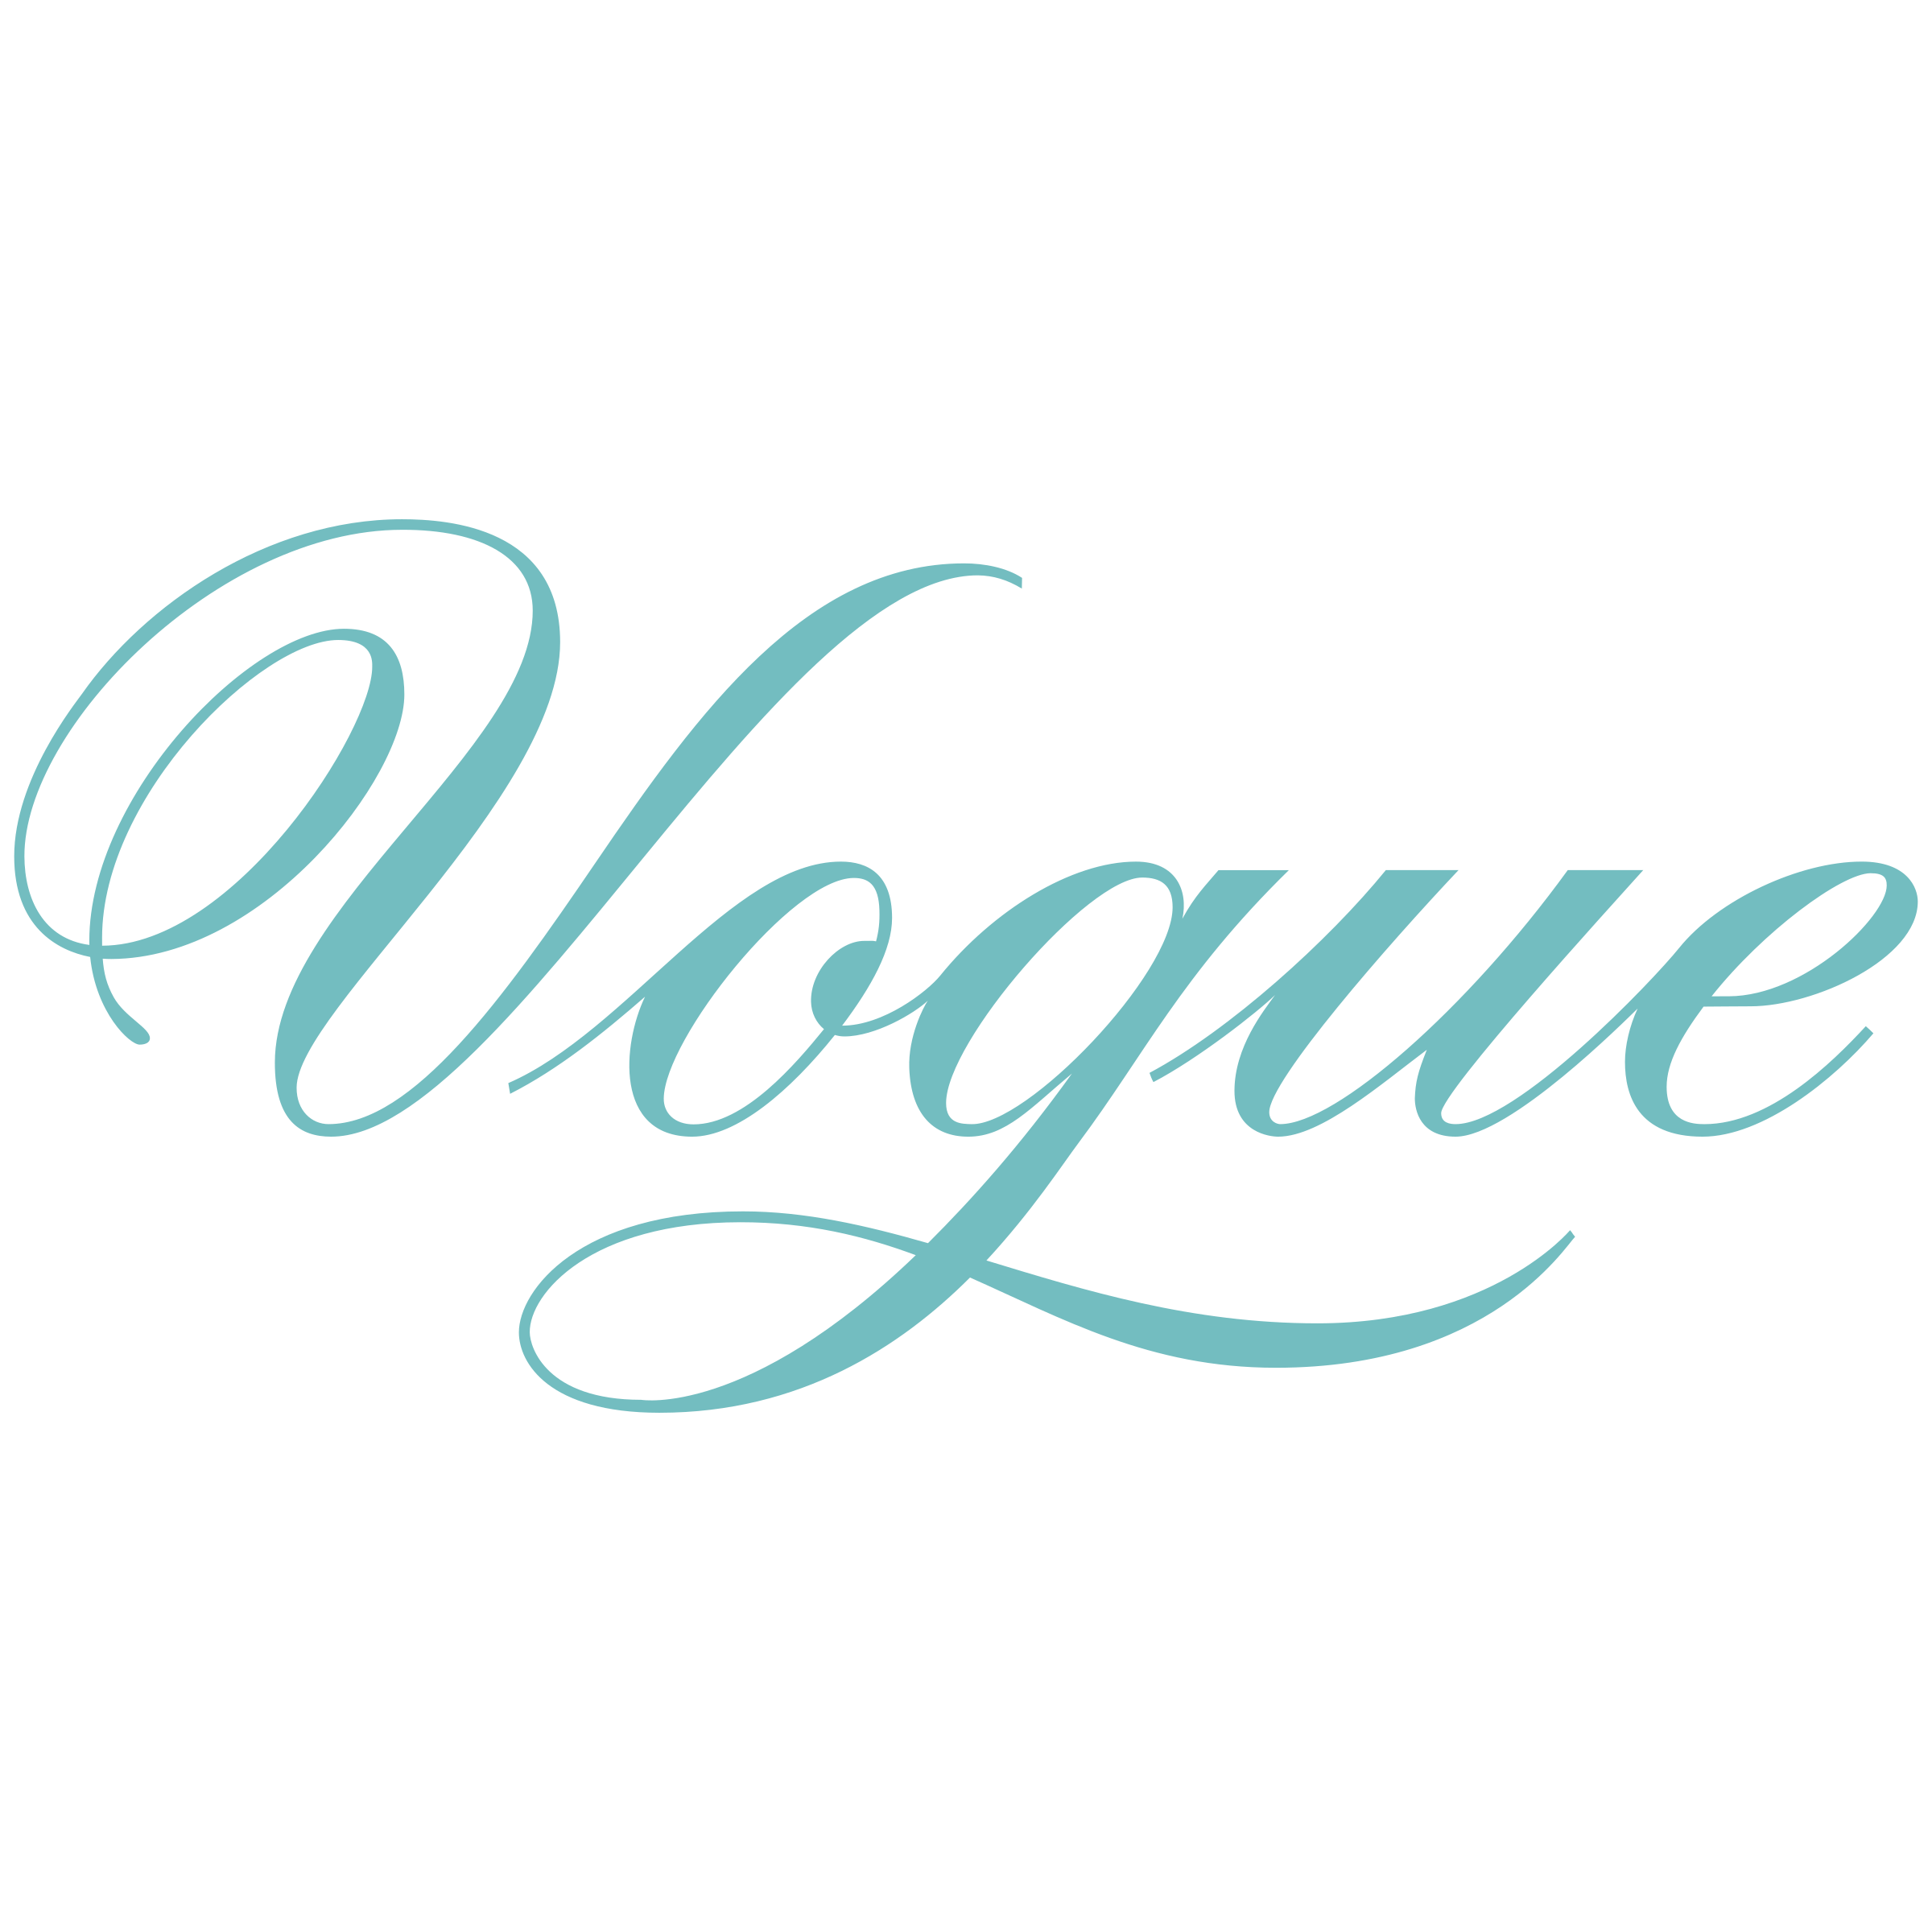 Vogue Logo - Vogue Logo PNG Transparent & SVG Vector - Freebie Supply